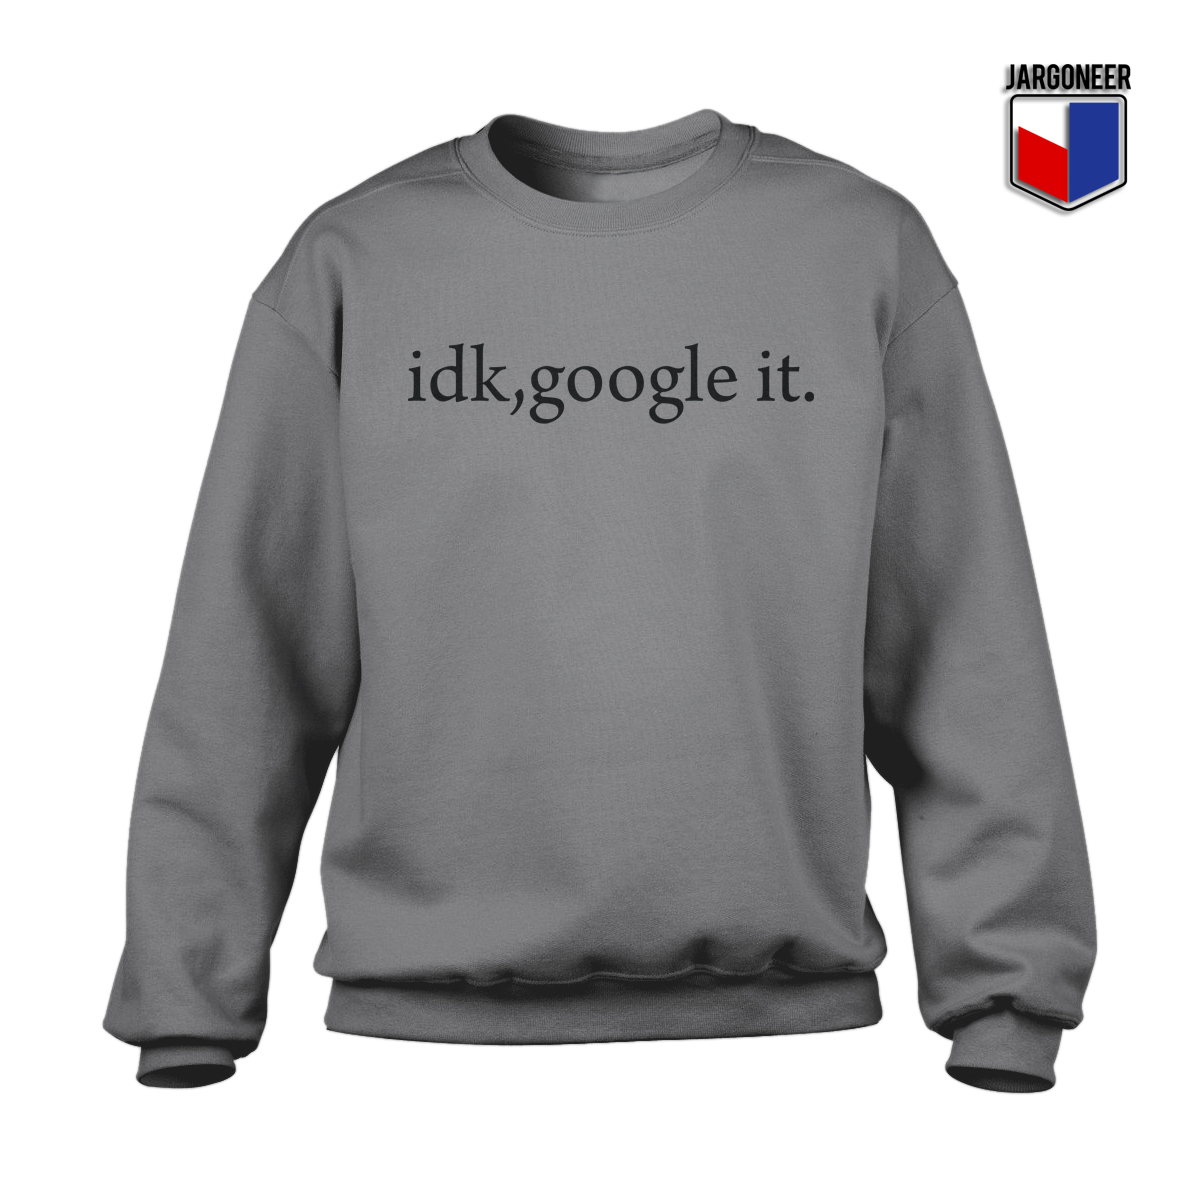 Idk google it grey sweetshirt - Shop Unique Graphic Cool Shirt Designs